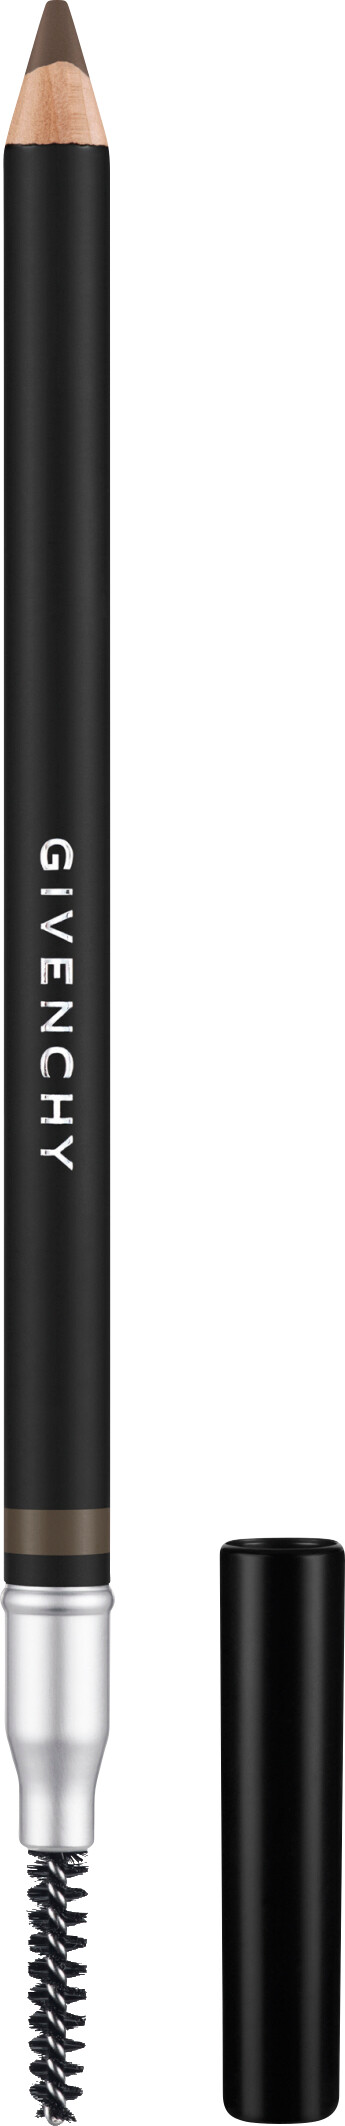 GIVENCHY Mister Eyebrow Powder Pencil 1.8g 03 - Dark